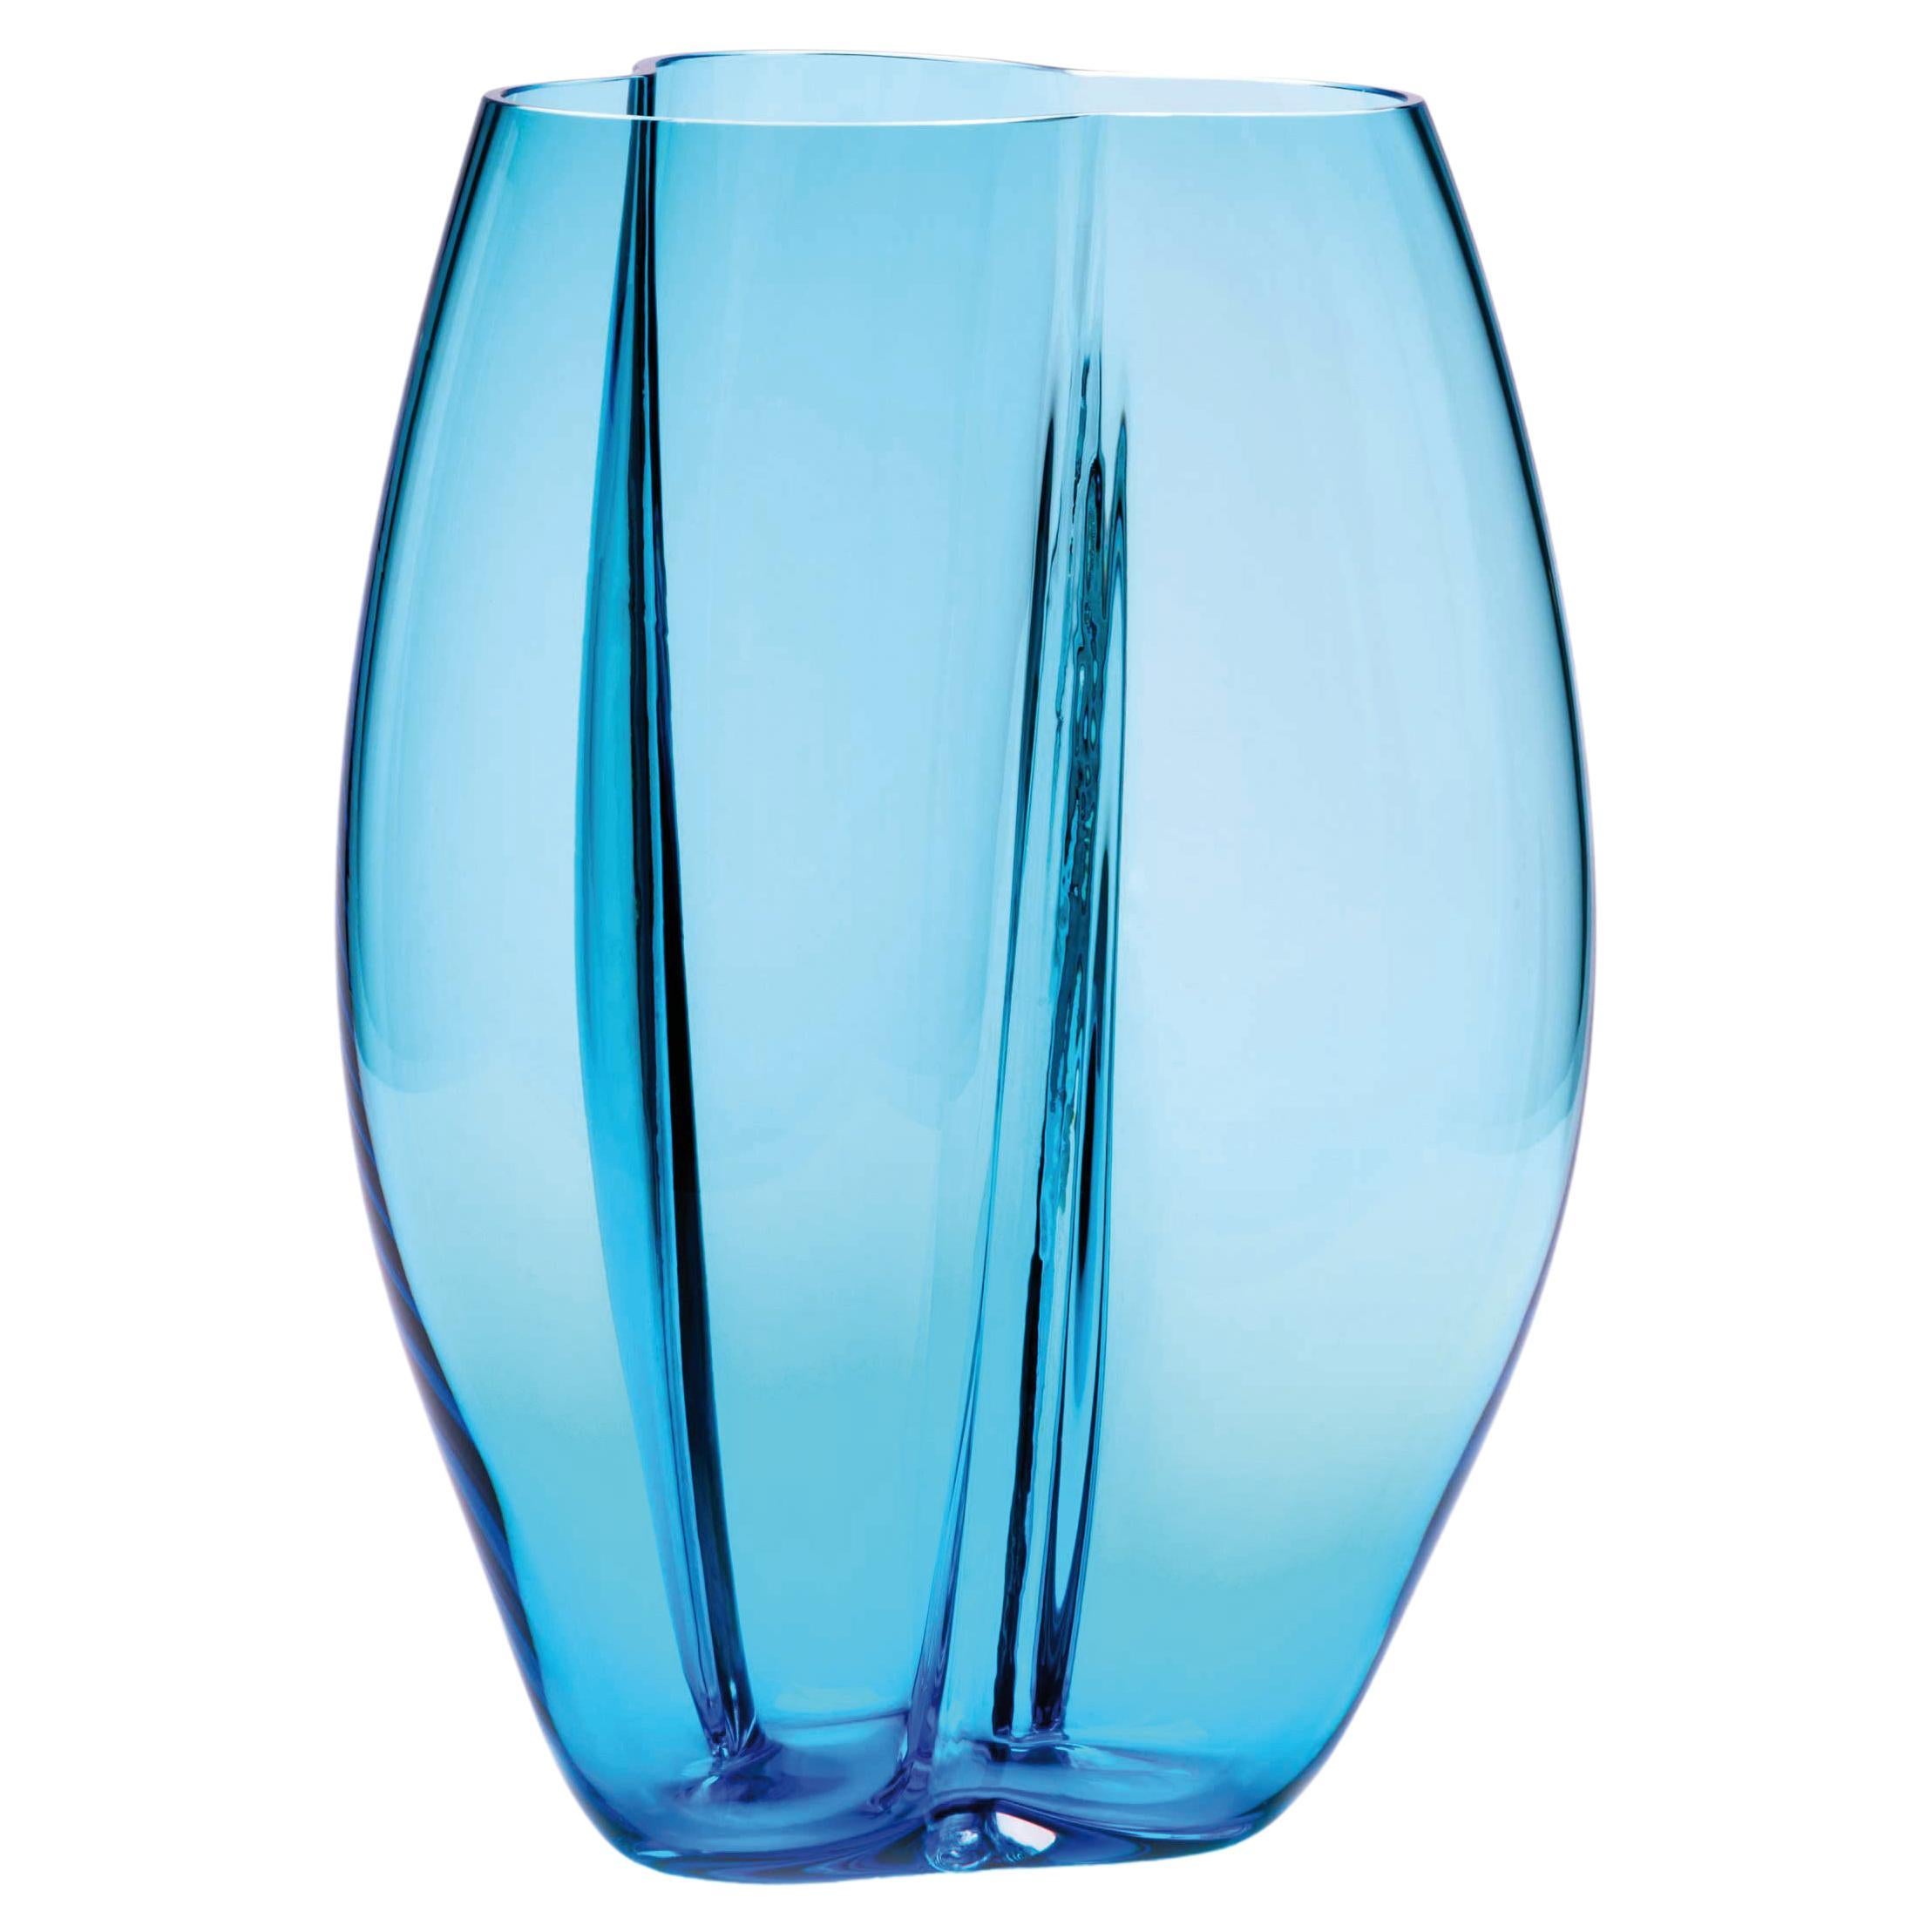 Petalo Blue Small Vase by Purho